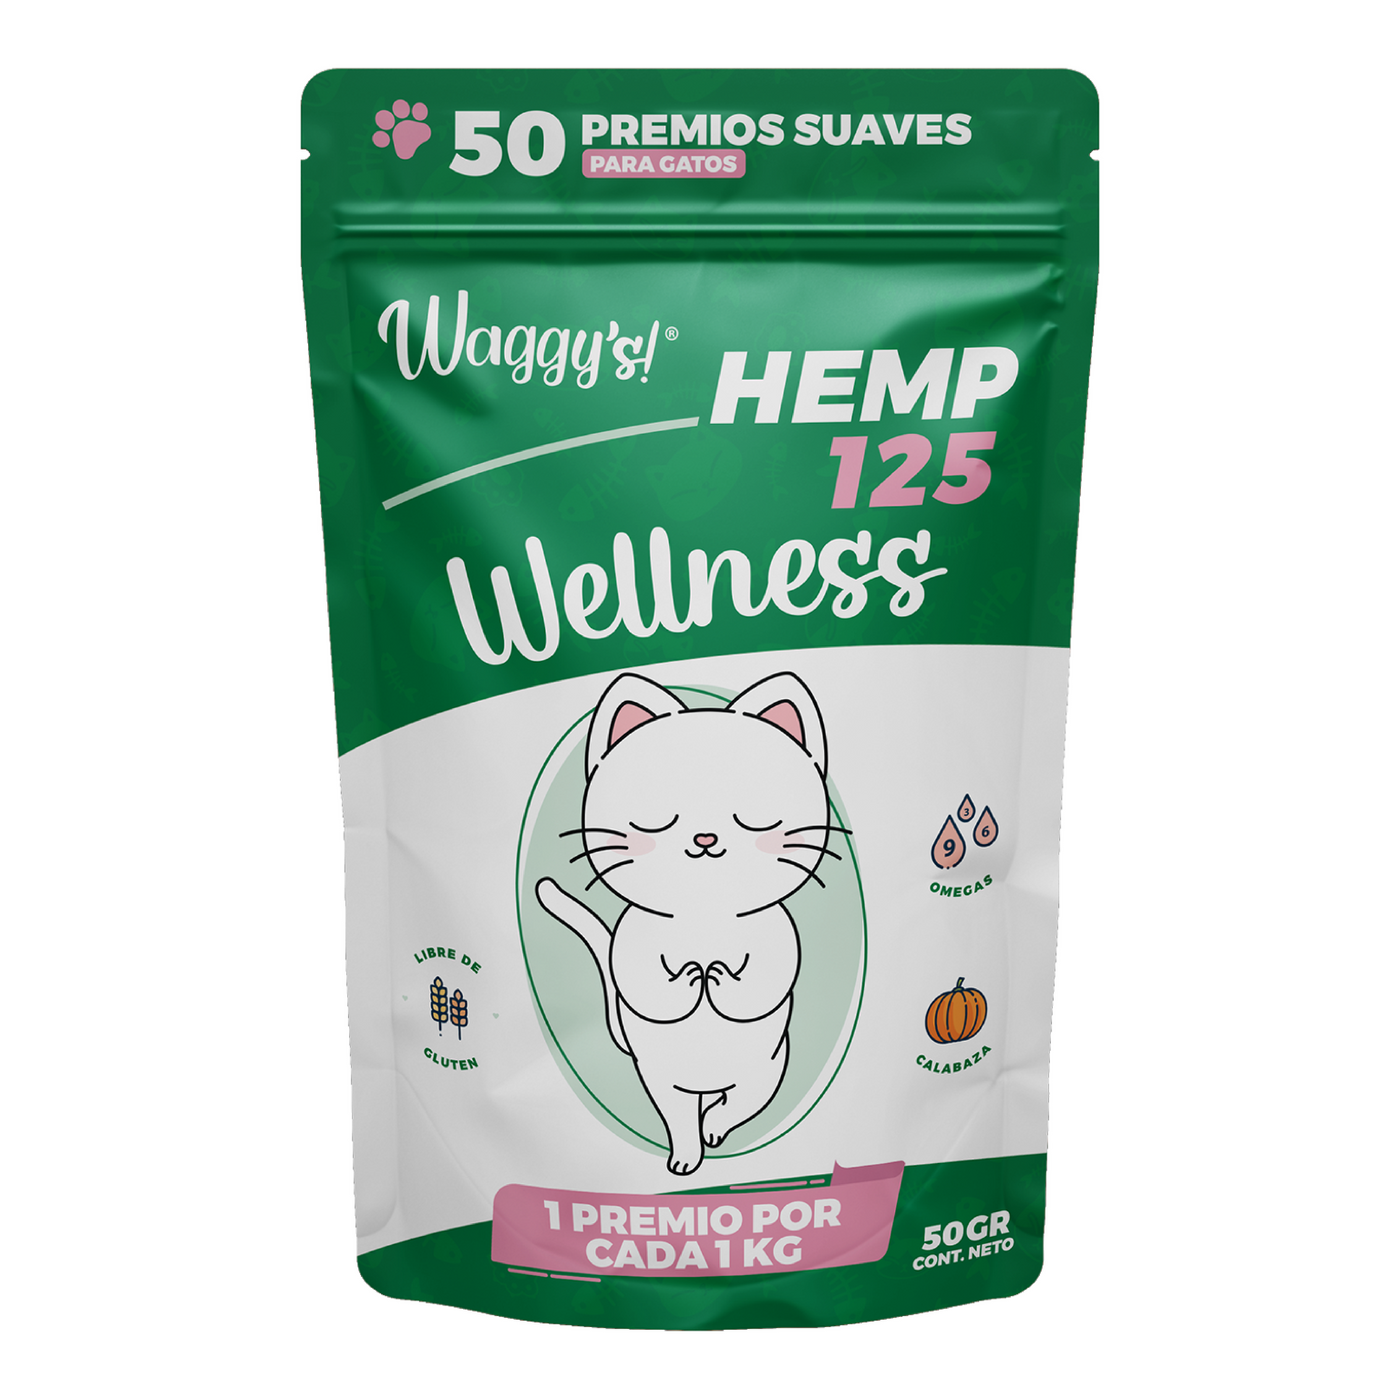 Waggy's® Wellness Gatos